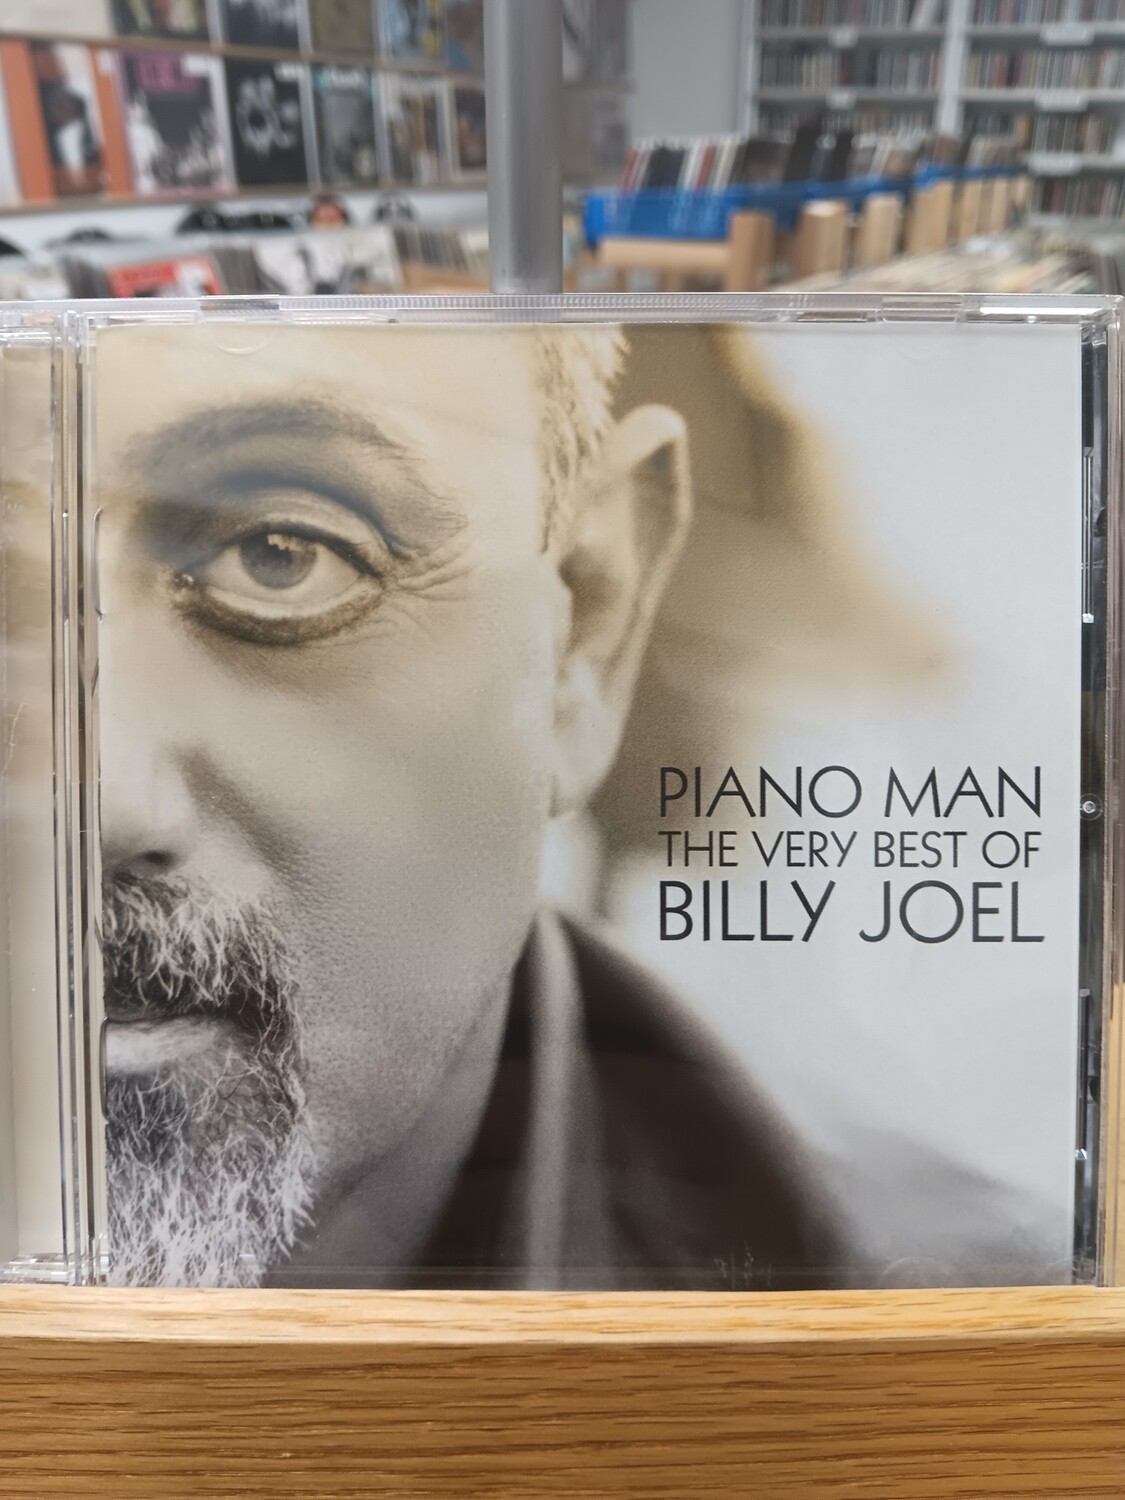 BILLY JOEL - PIANO MAN THE VERY BEST OF BILLY JOEL (CD)